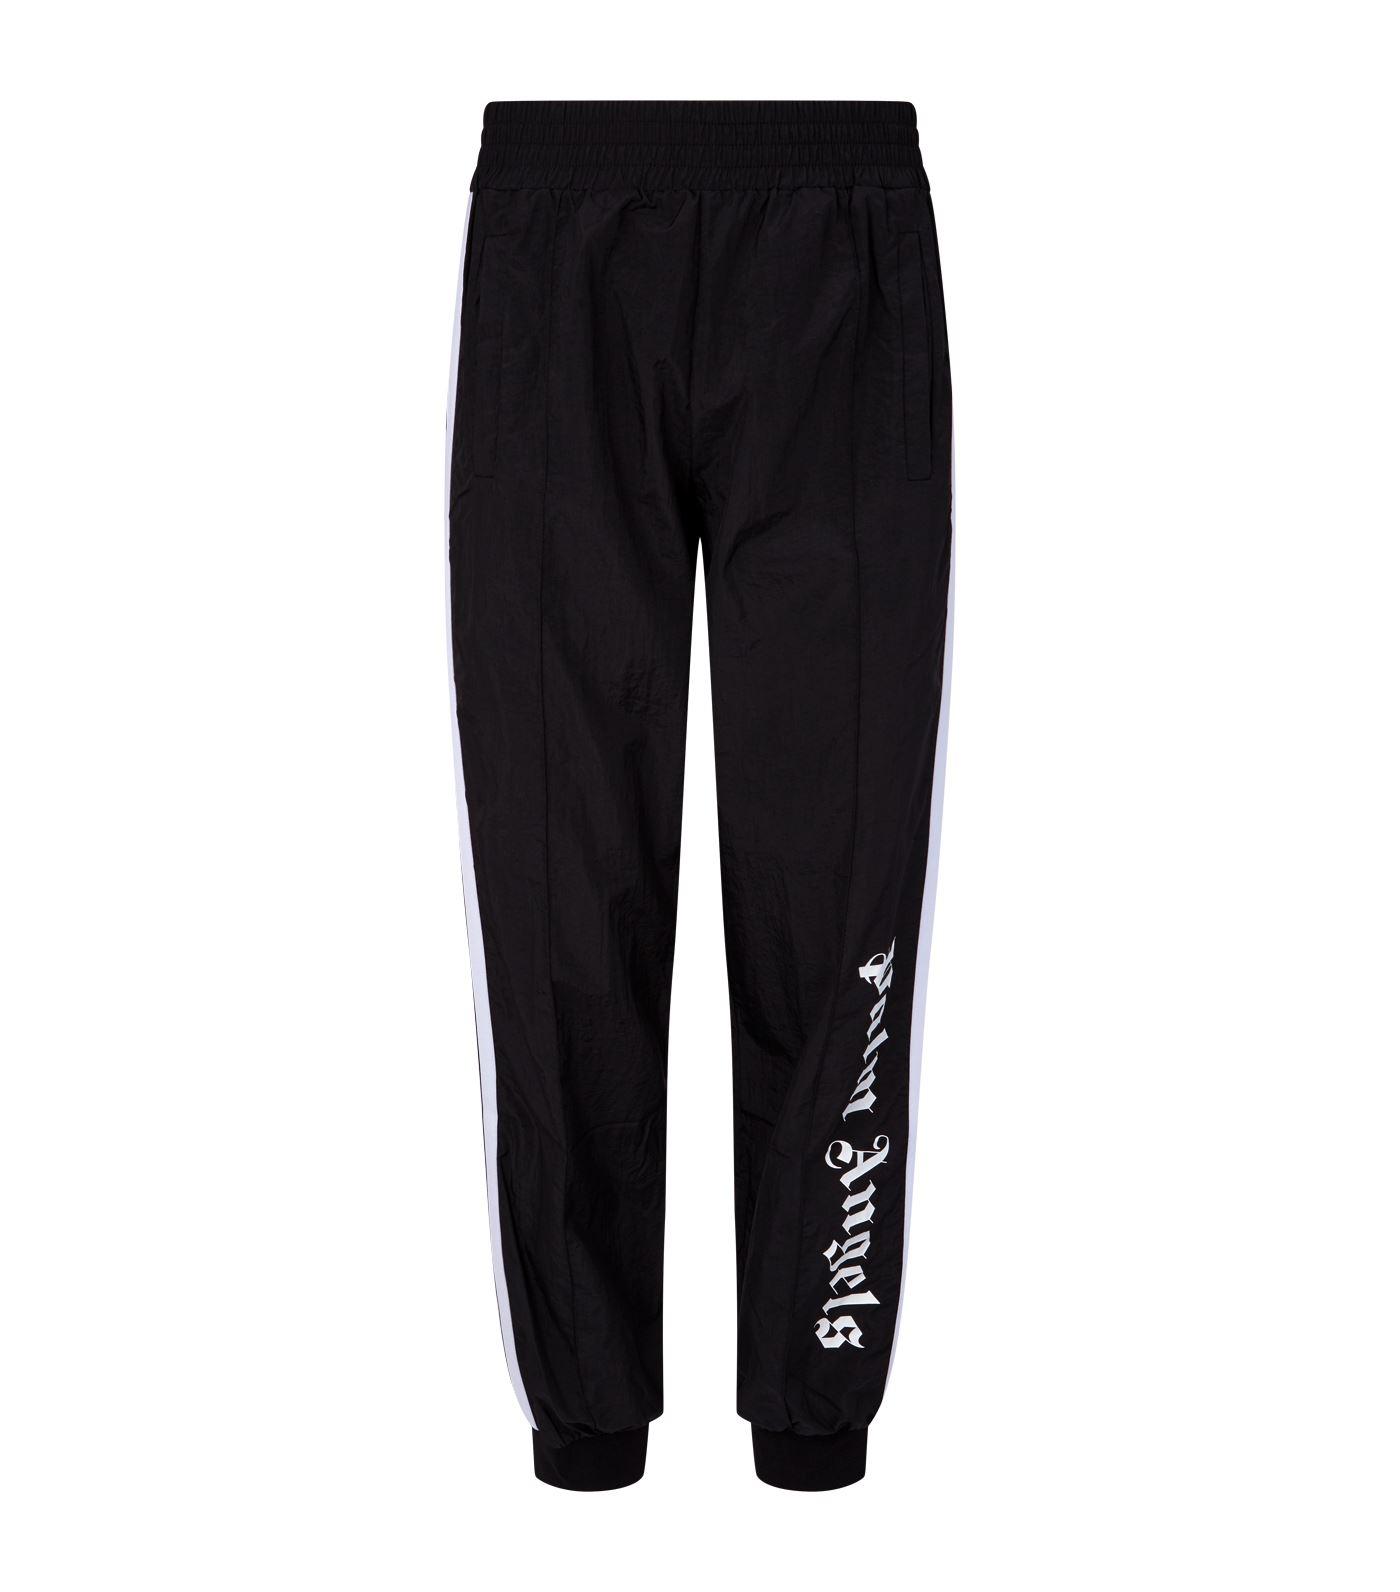 Palm Angels Logo Track Sweatpants in Black for Men - Lyst